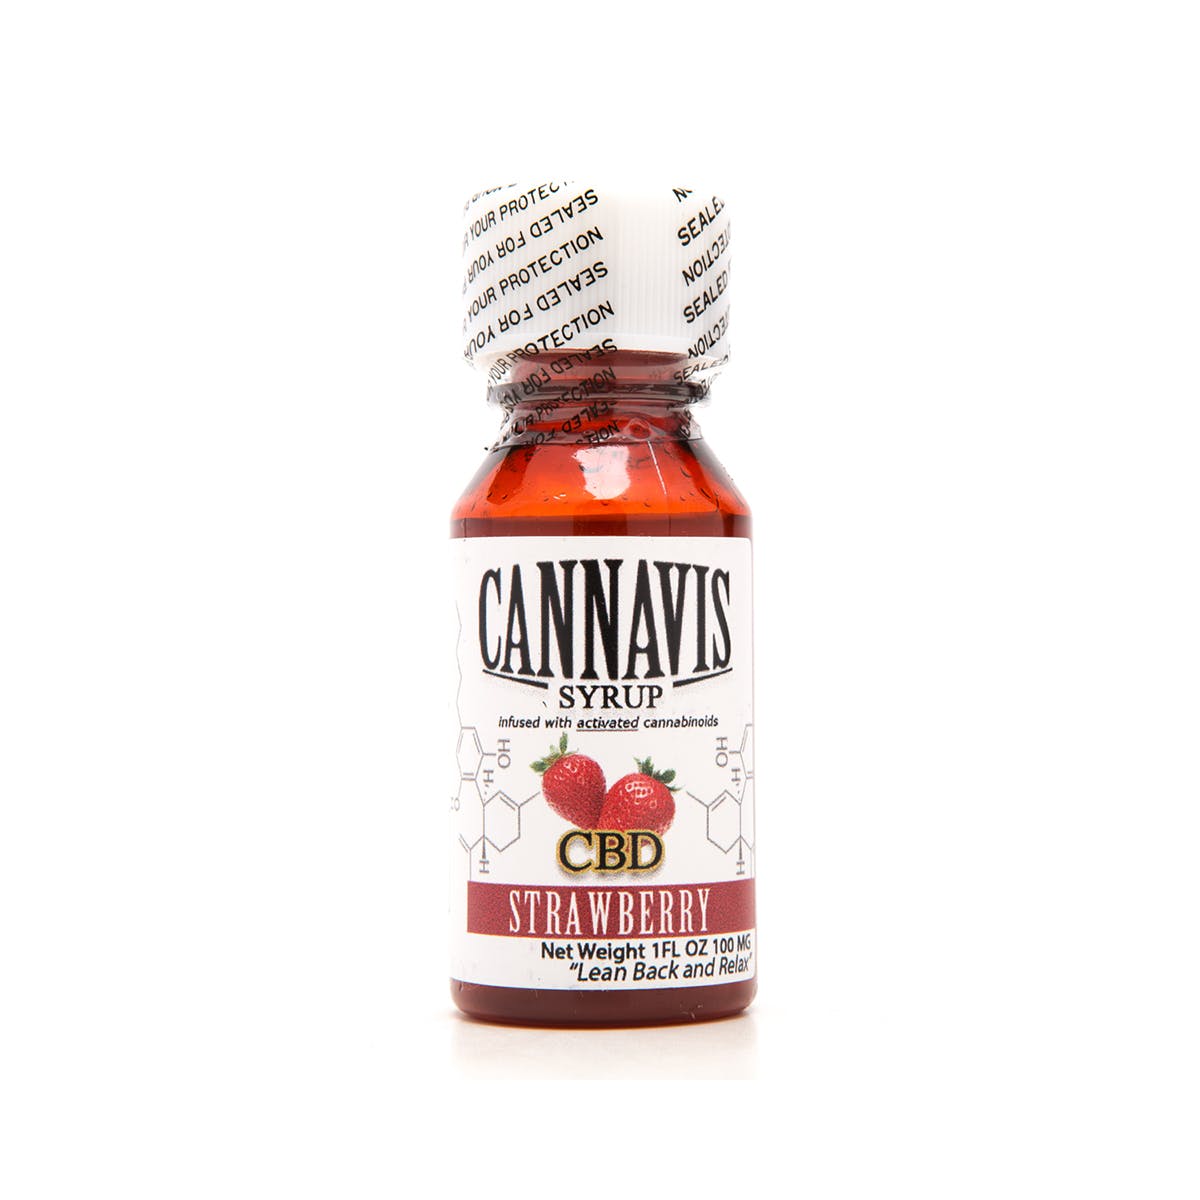 marijuana-dispensaries-elac-east-la-cannabis-in-east-los-angeles-cannavis-syrup-2c-cbd-strawberry-100mg